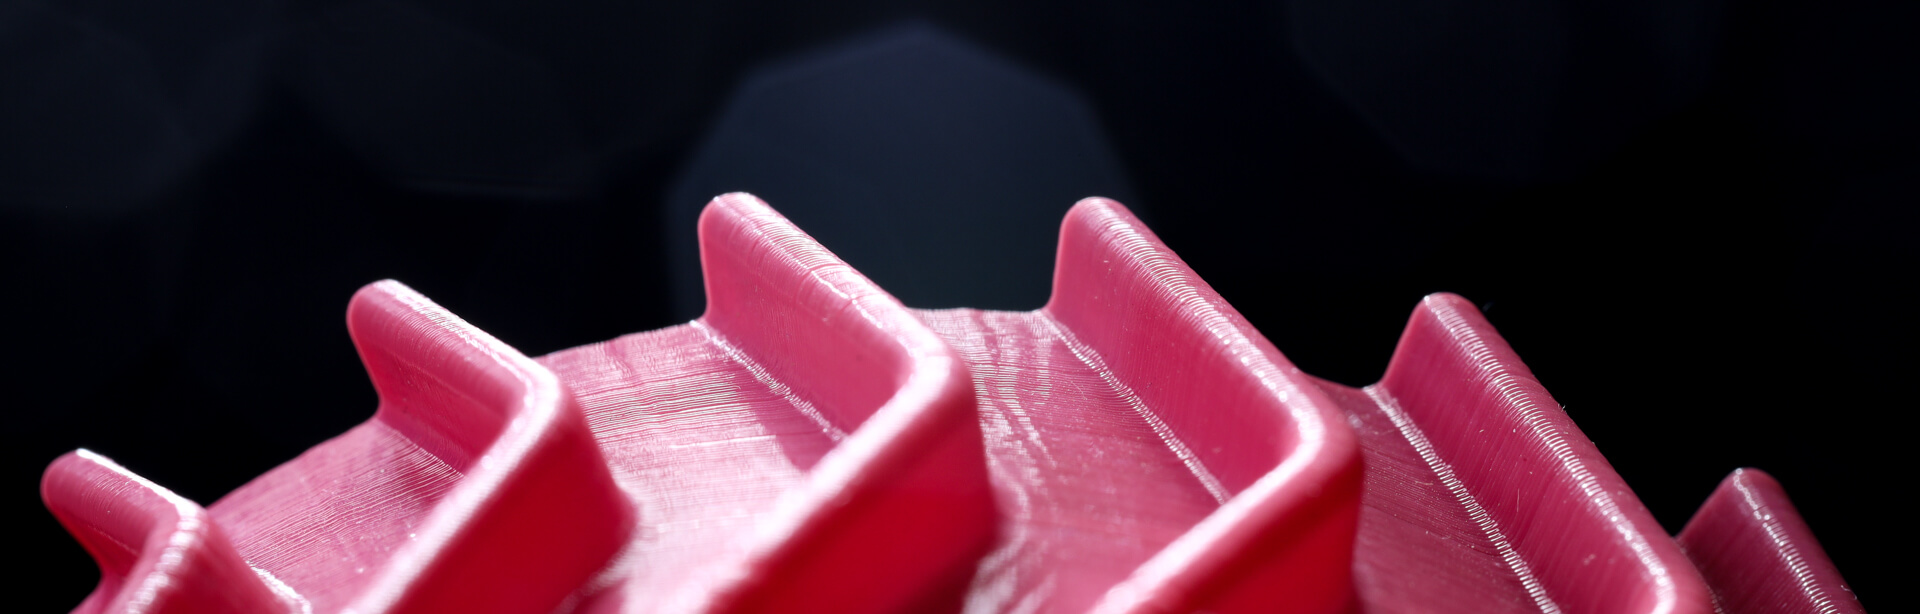 NinjaFlex TPU Filament Material For 3D Printing